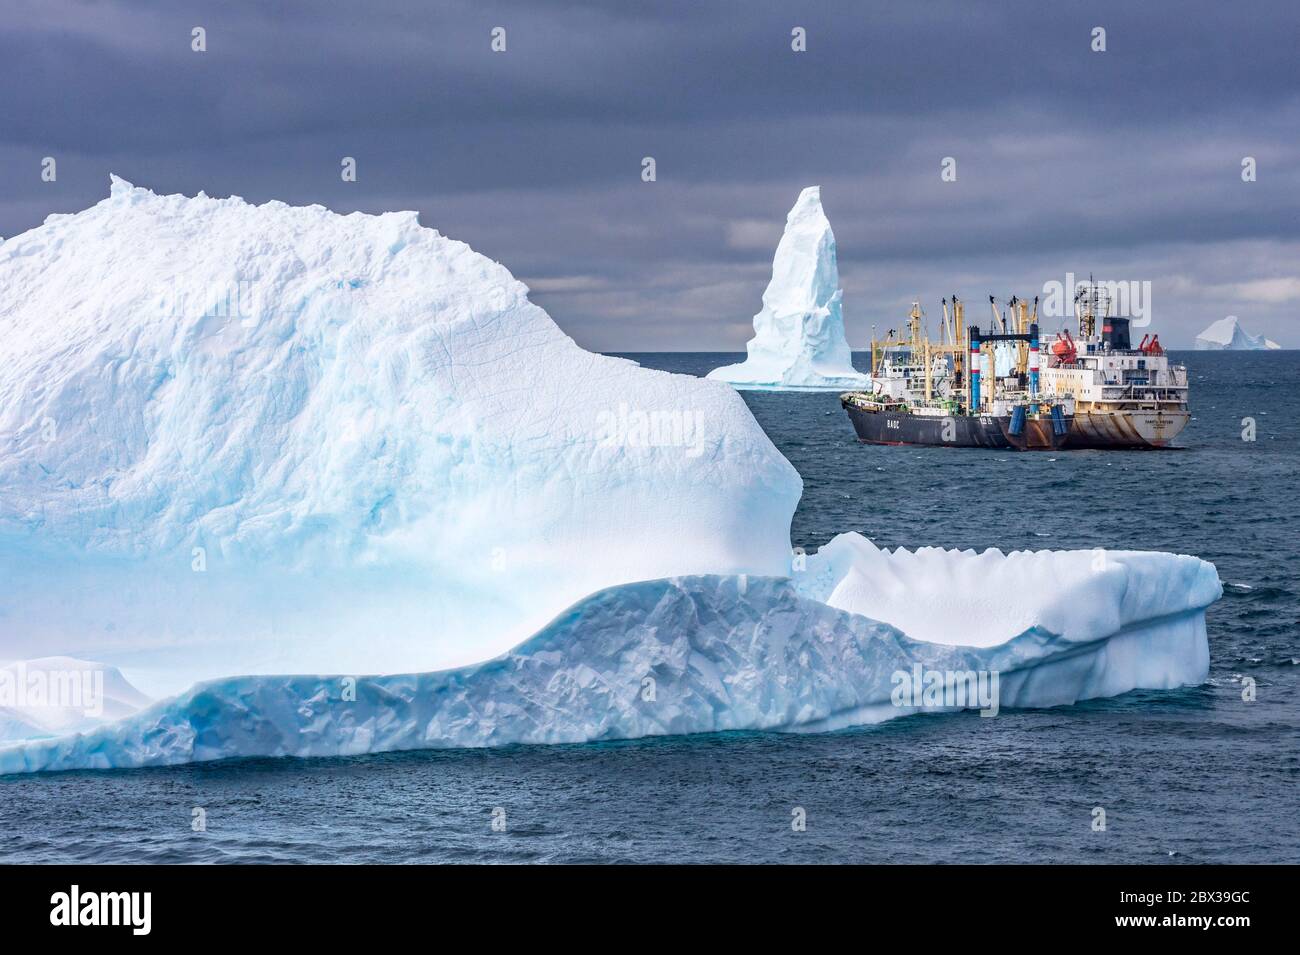 Polar regions, Antarctica, South Orkney Islands, Signy Island, Southern Ocean, krill fishing boat between icebergs Stock Photo